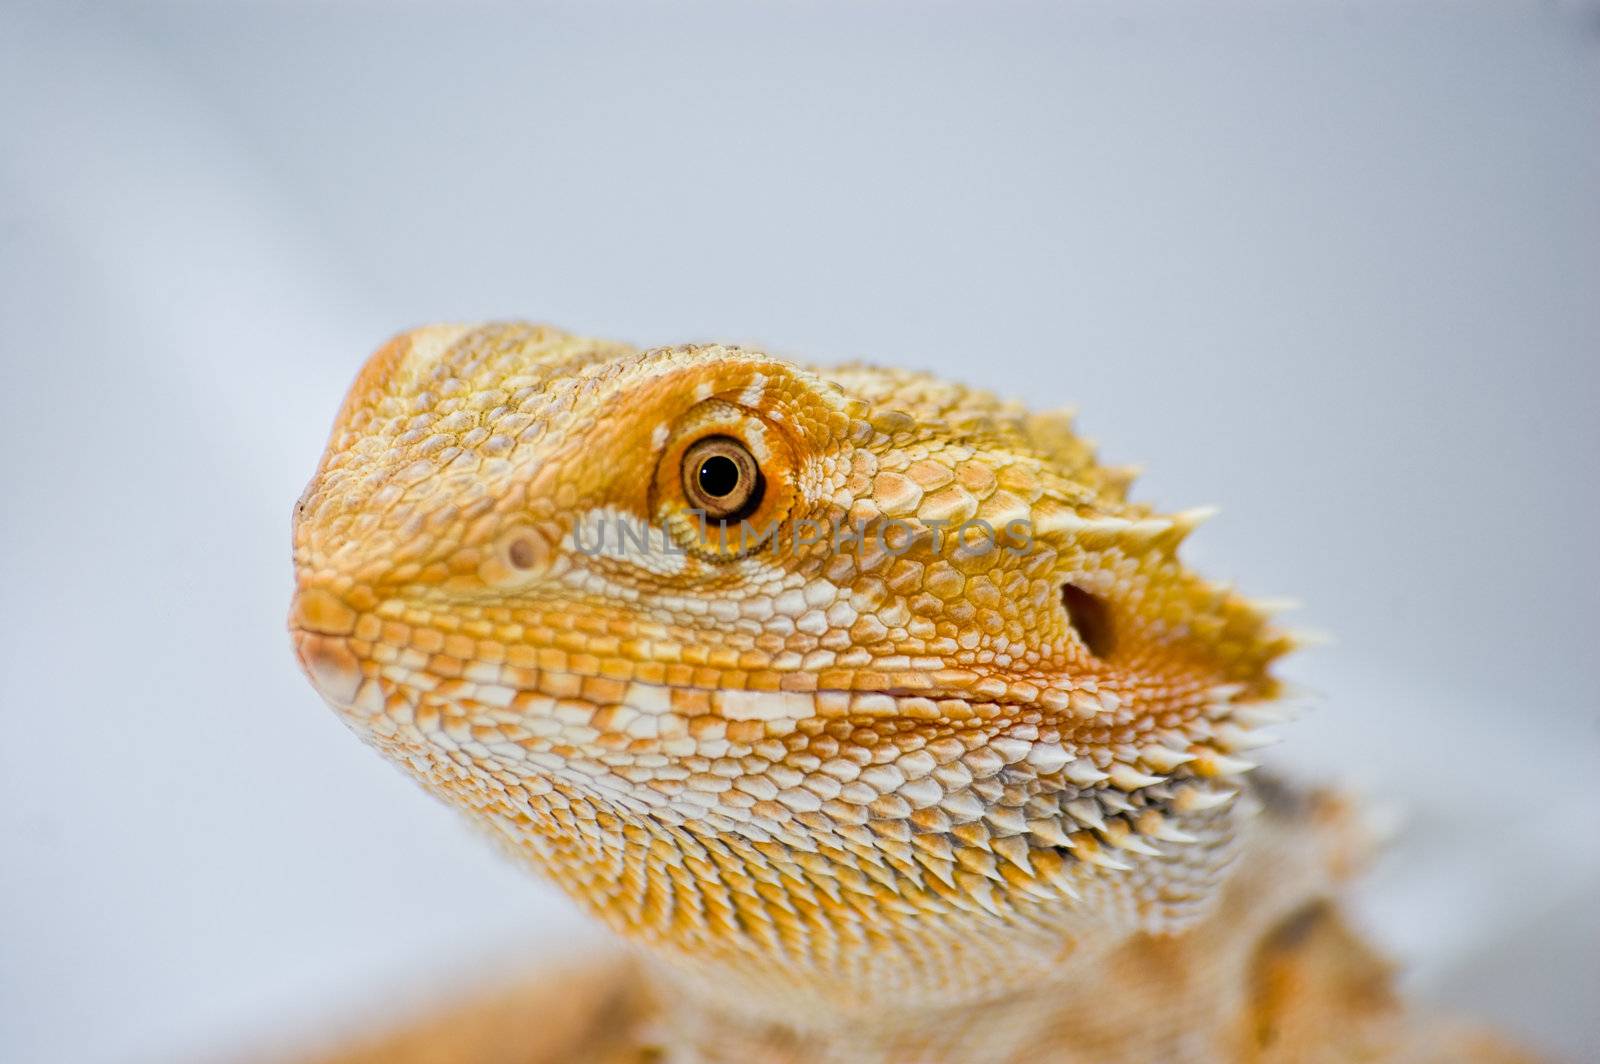 a close up portrait of a sandfire cross citrus bearded dragon (pogona vitticeps)